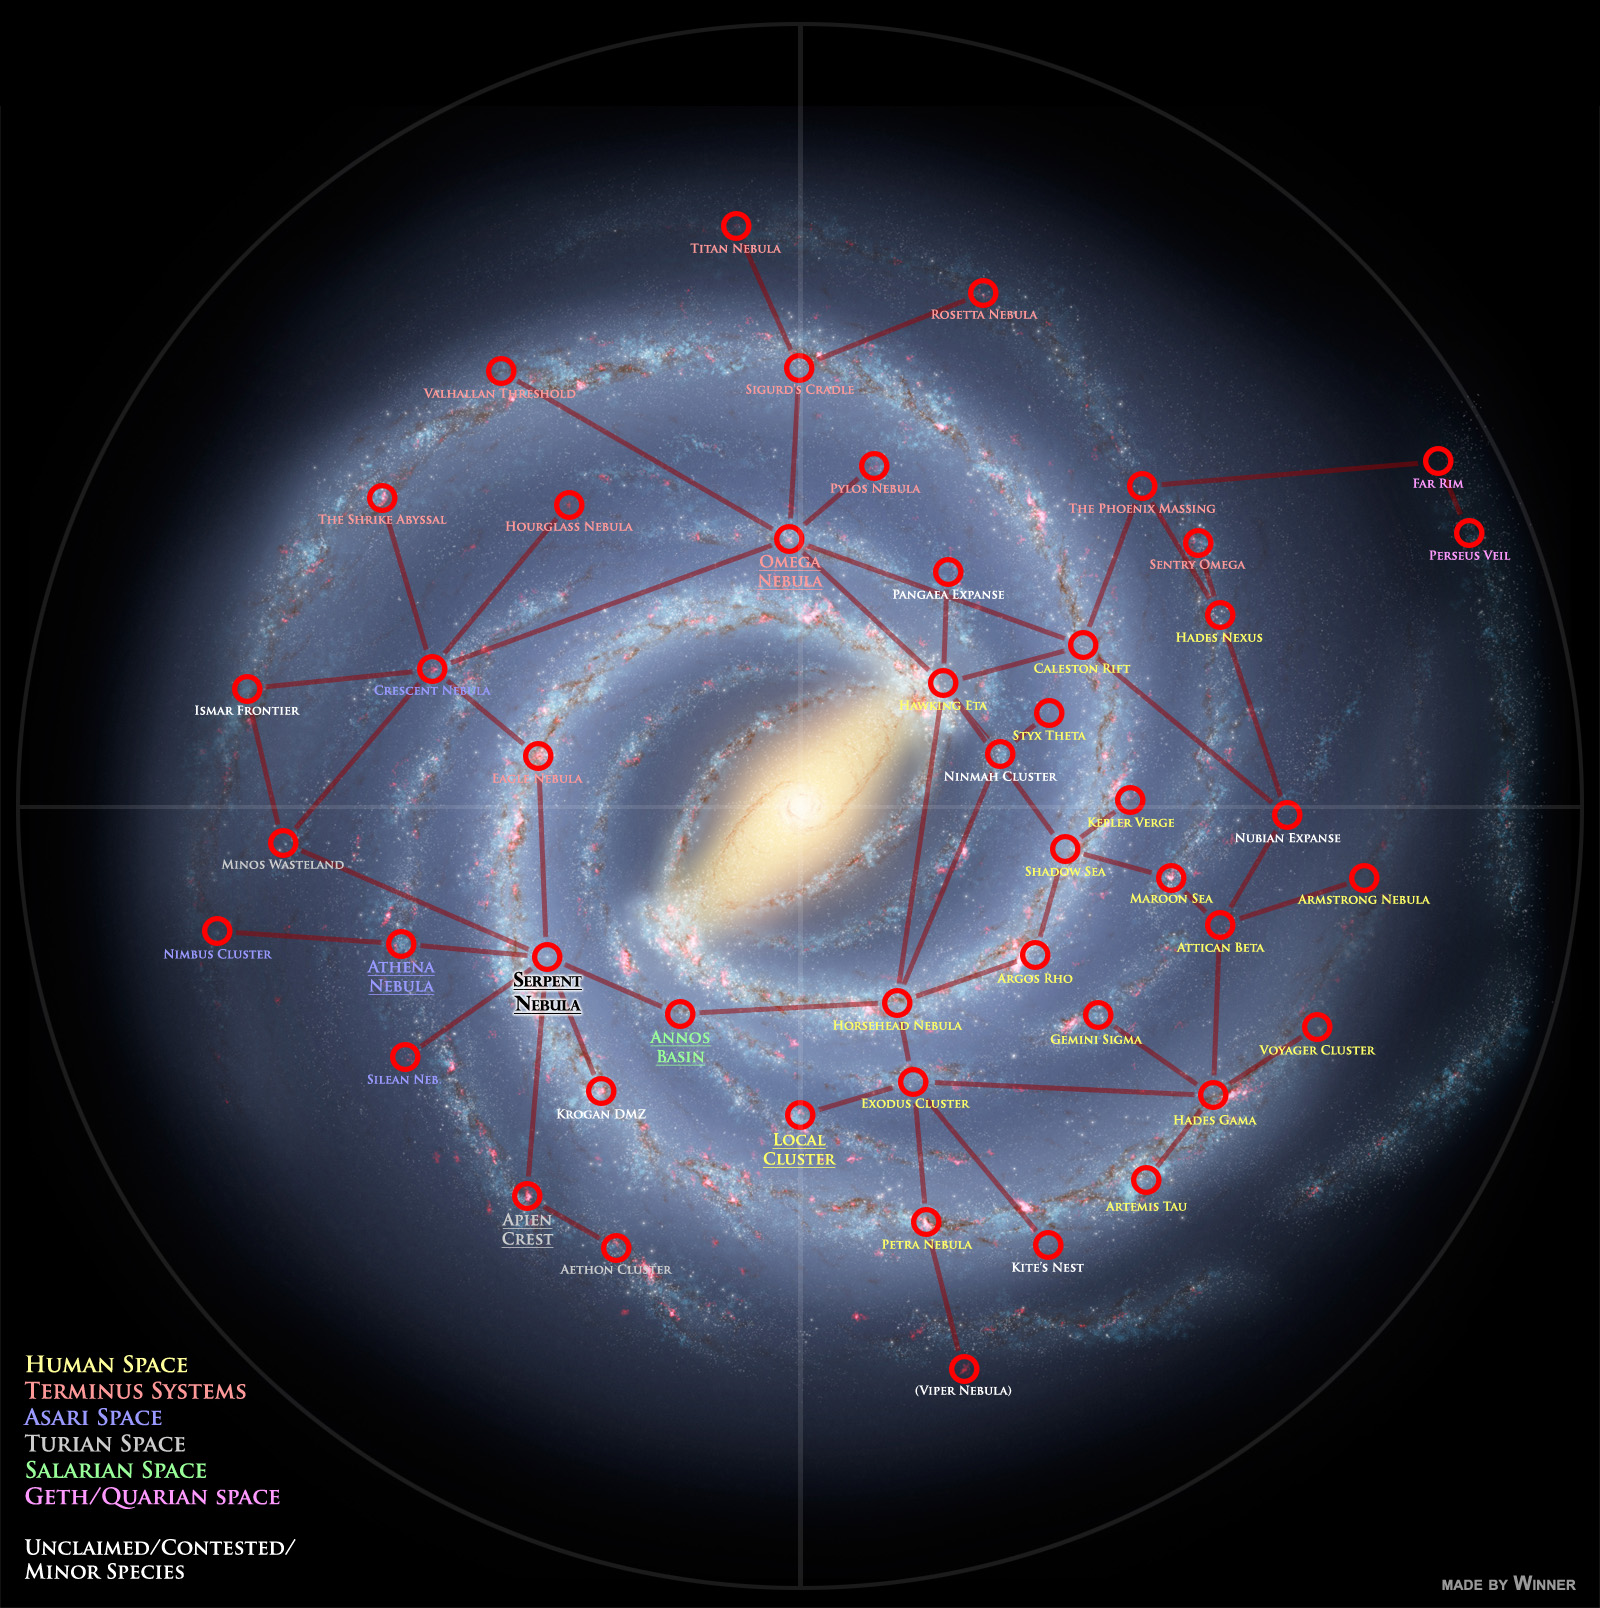 http://img1.wikia.nocookie.net/__cb20120501112436/masseffect/images/9/92/Mass_Effect_3_Galaxy_Map.jpg